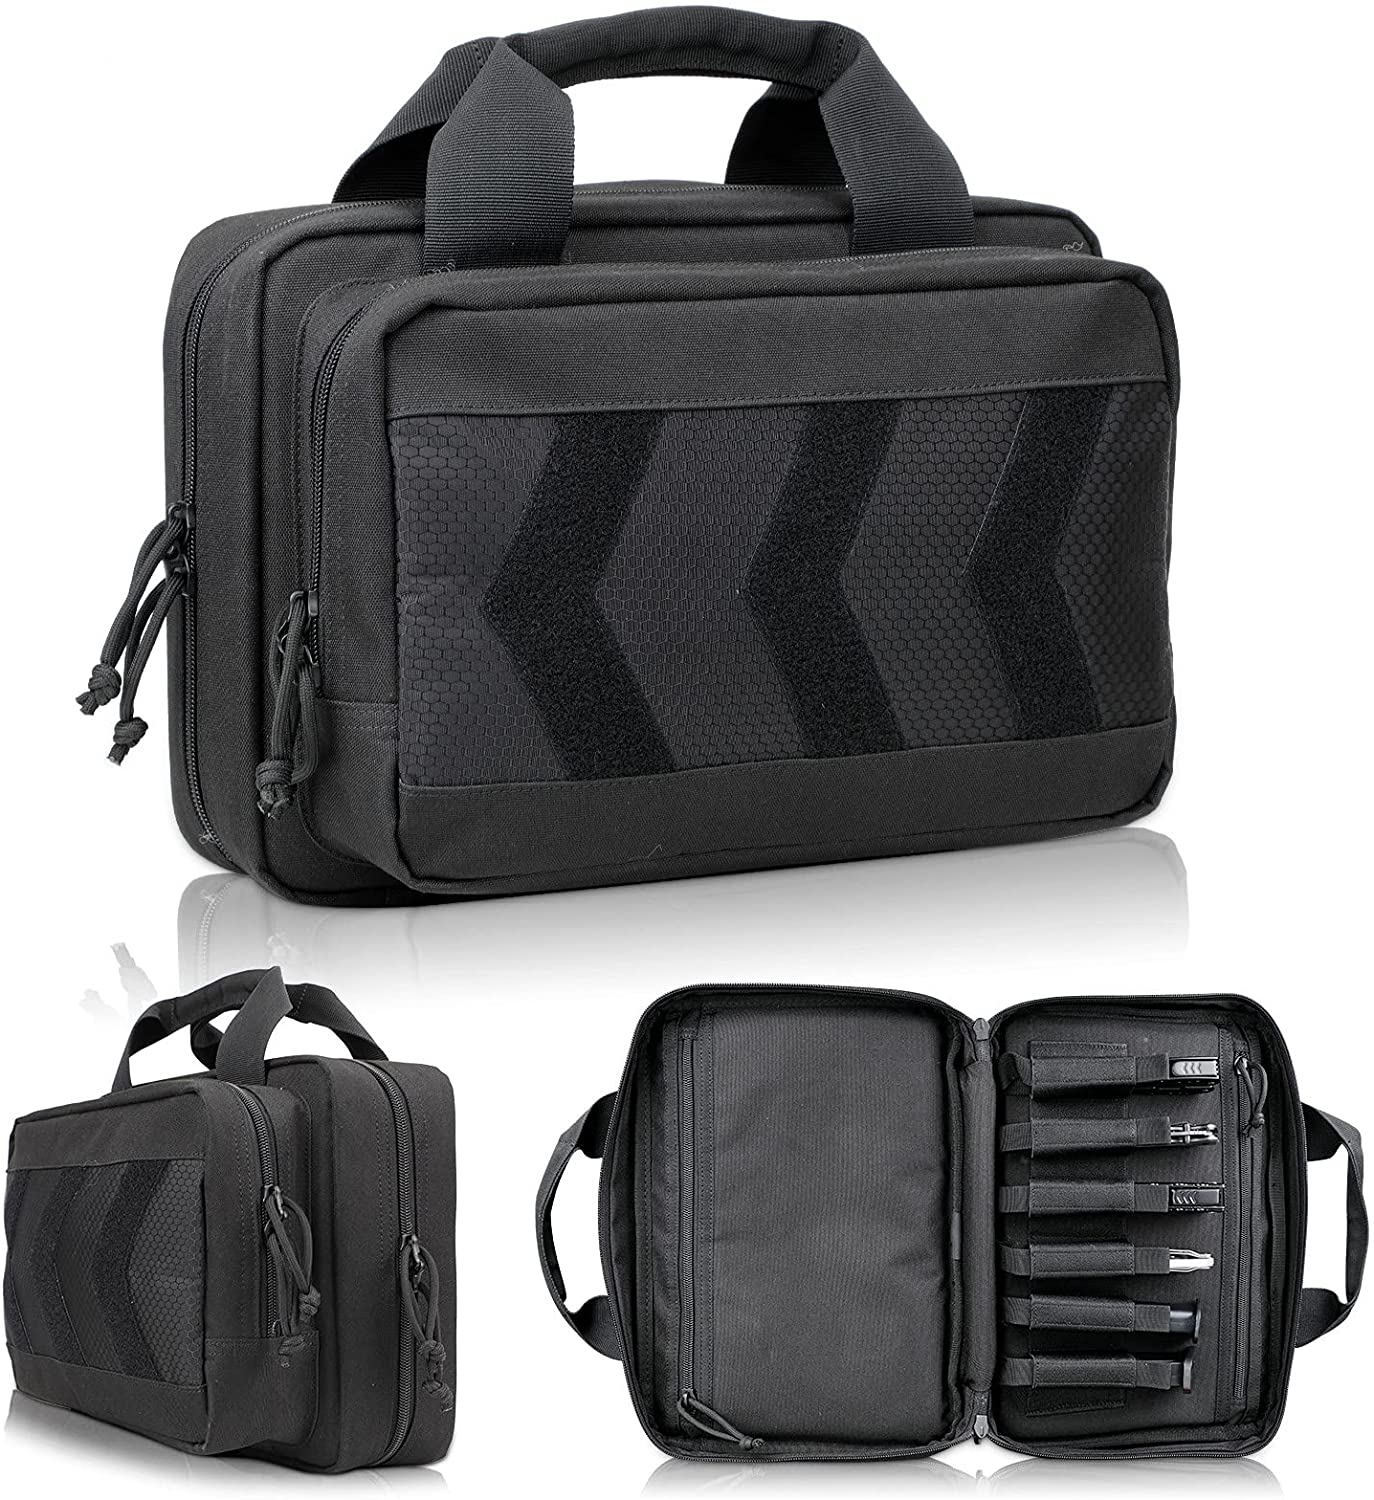 Sunfiner Master Series Upgraded Design Range Bag with Lockable Zipper